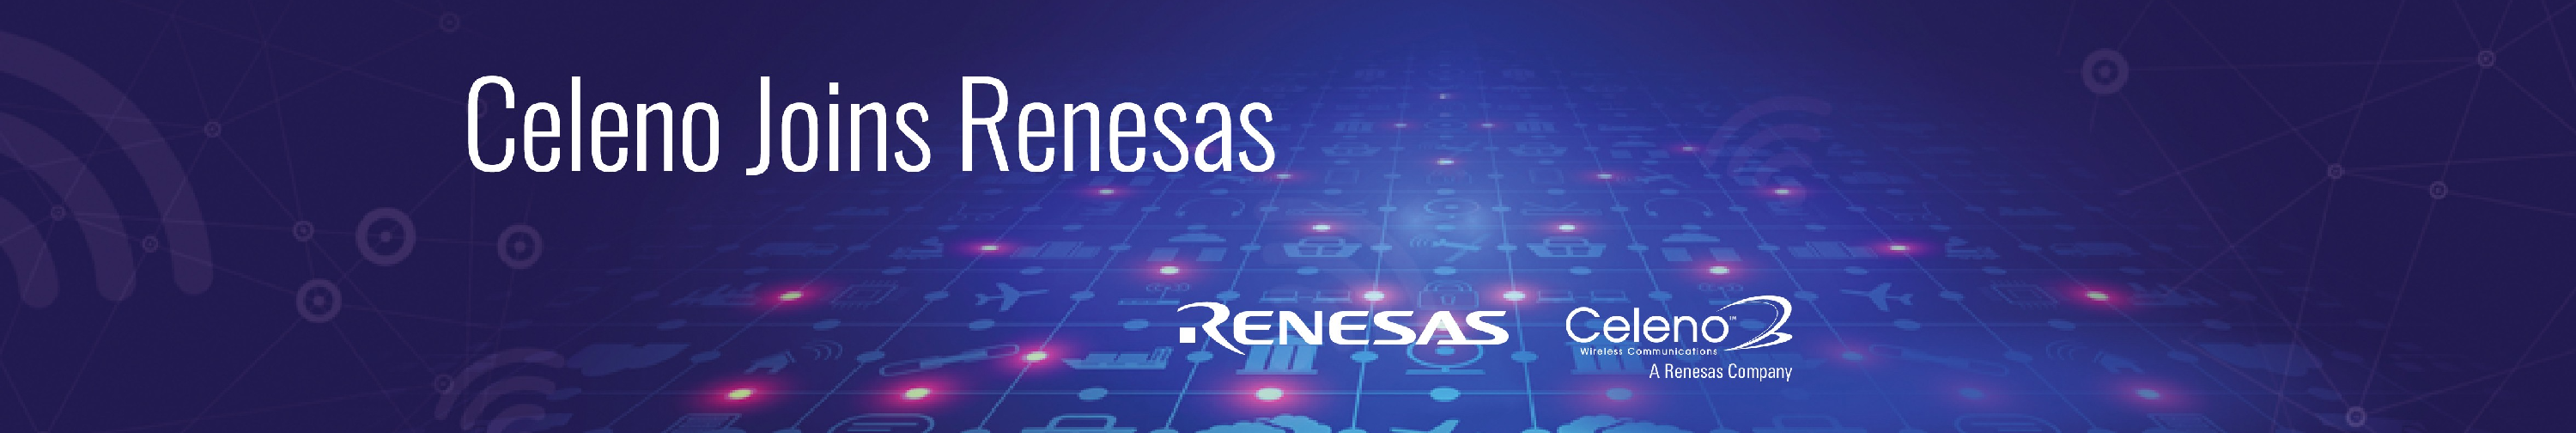 Renesas Electronics background